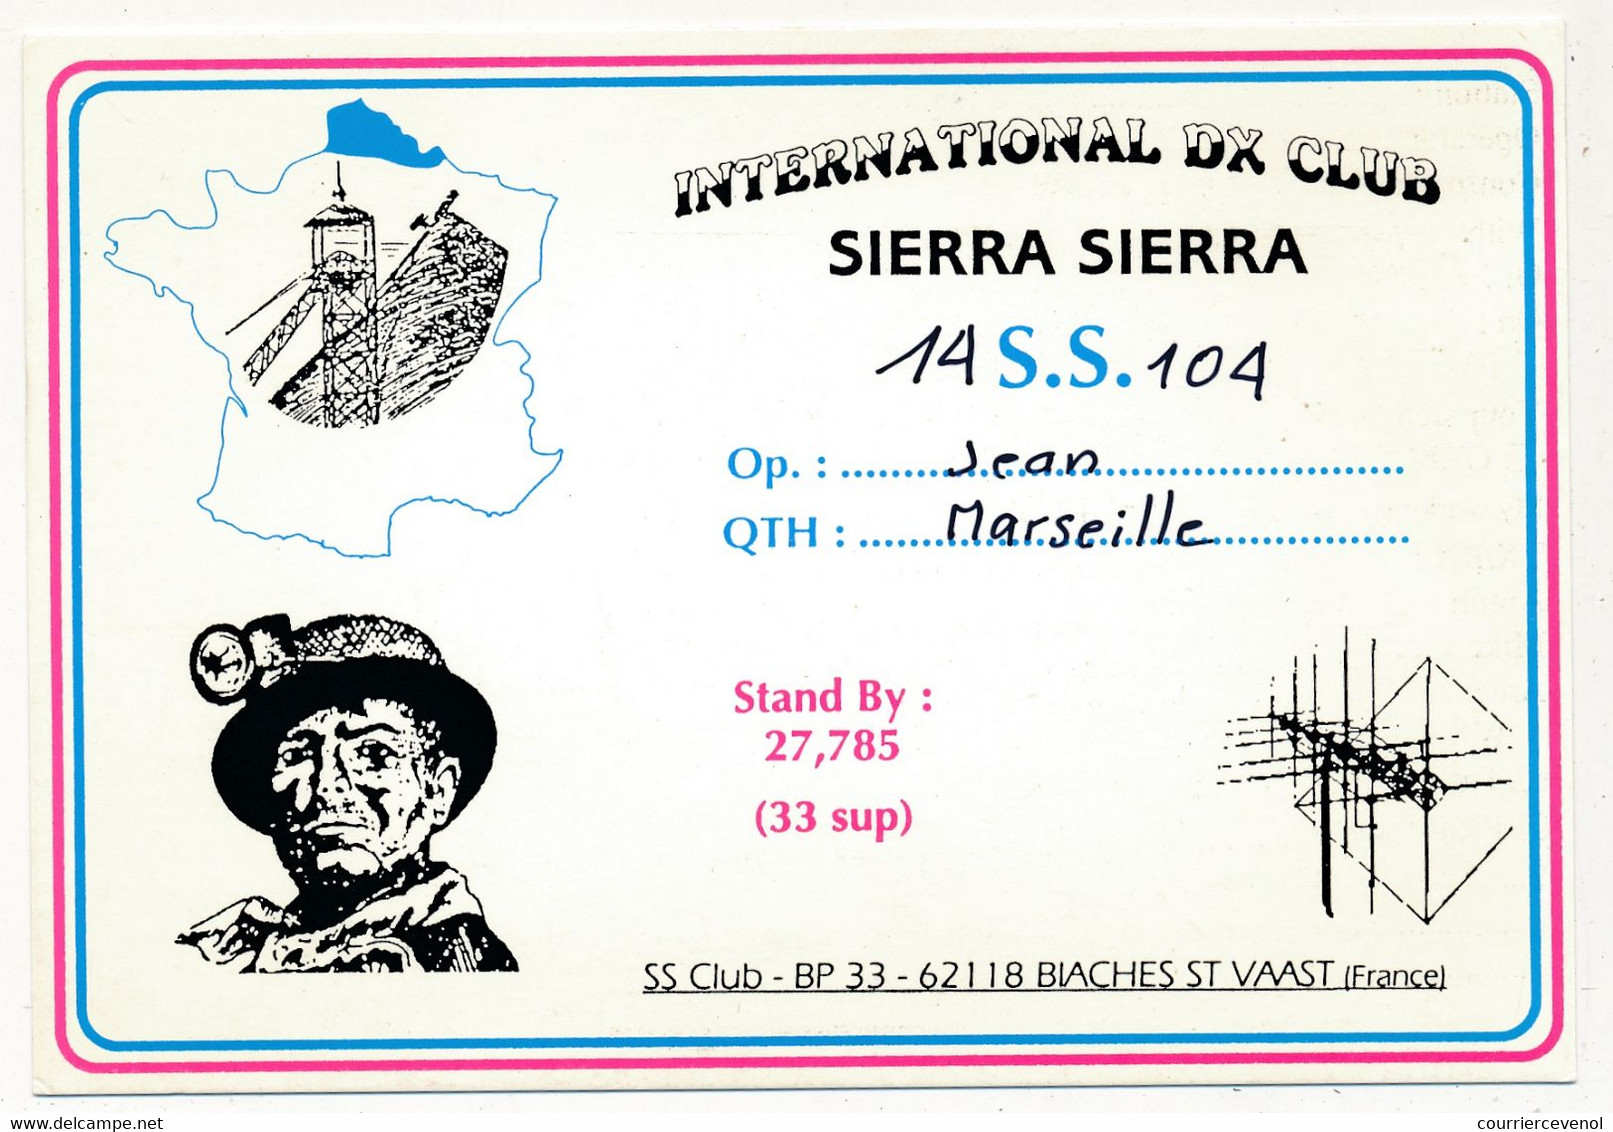 FRANCE - Carte Radio-amateur - FRANCE / BIACHES ST VAAST - International DX Club Sierra Sierra - 14 SS 104 - Amateurfunk